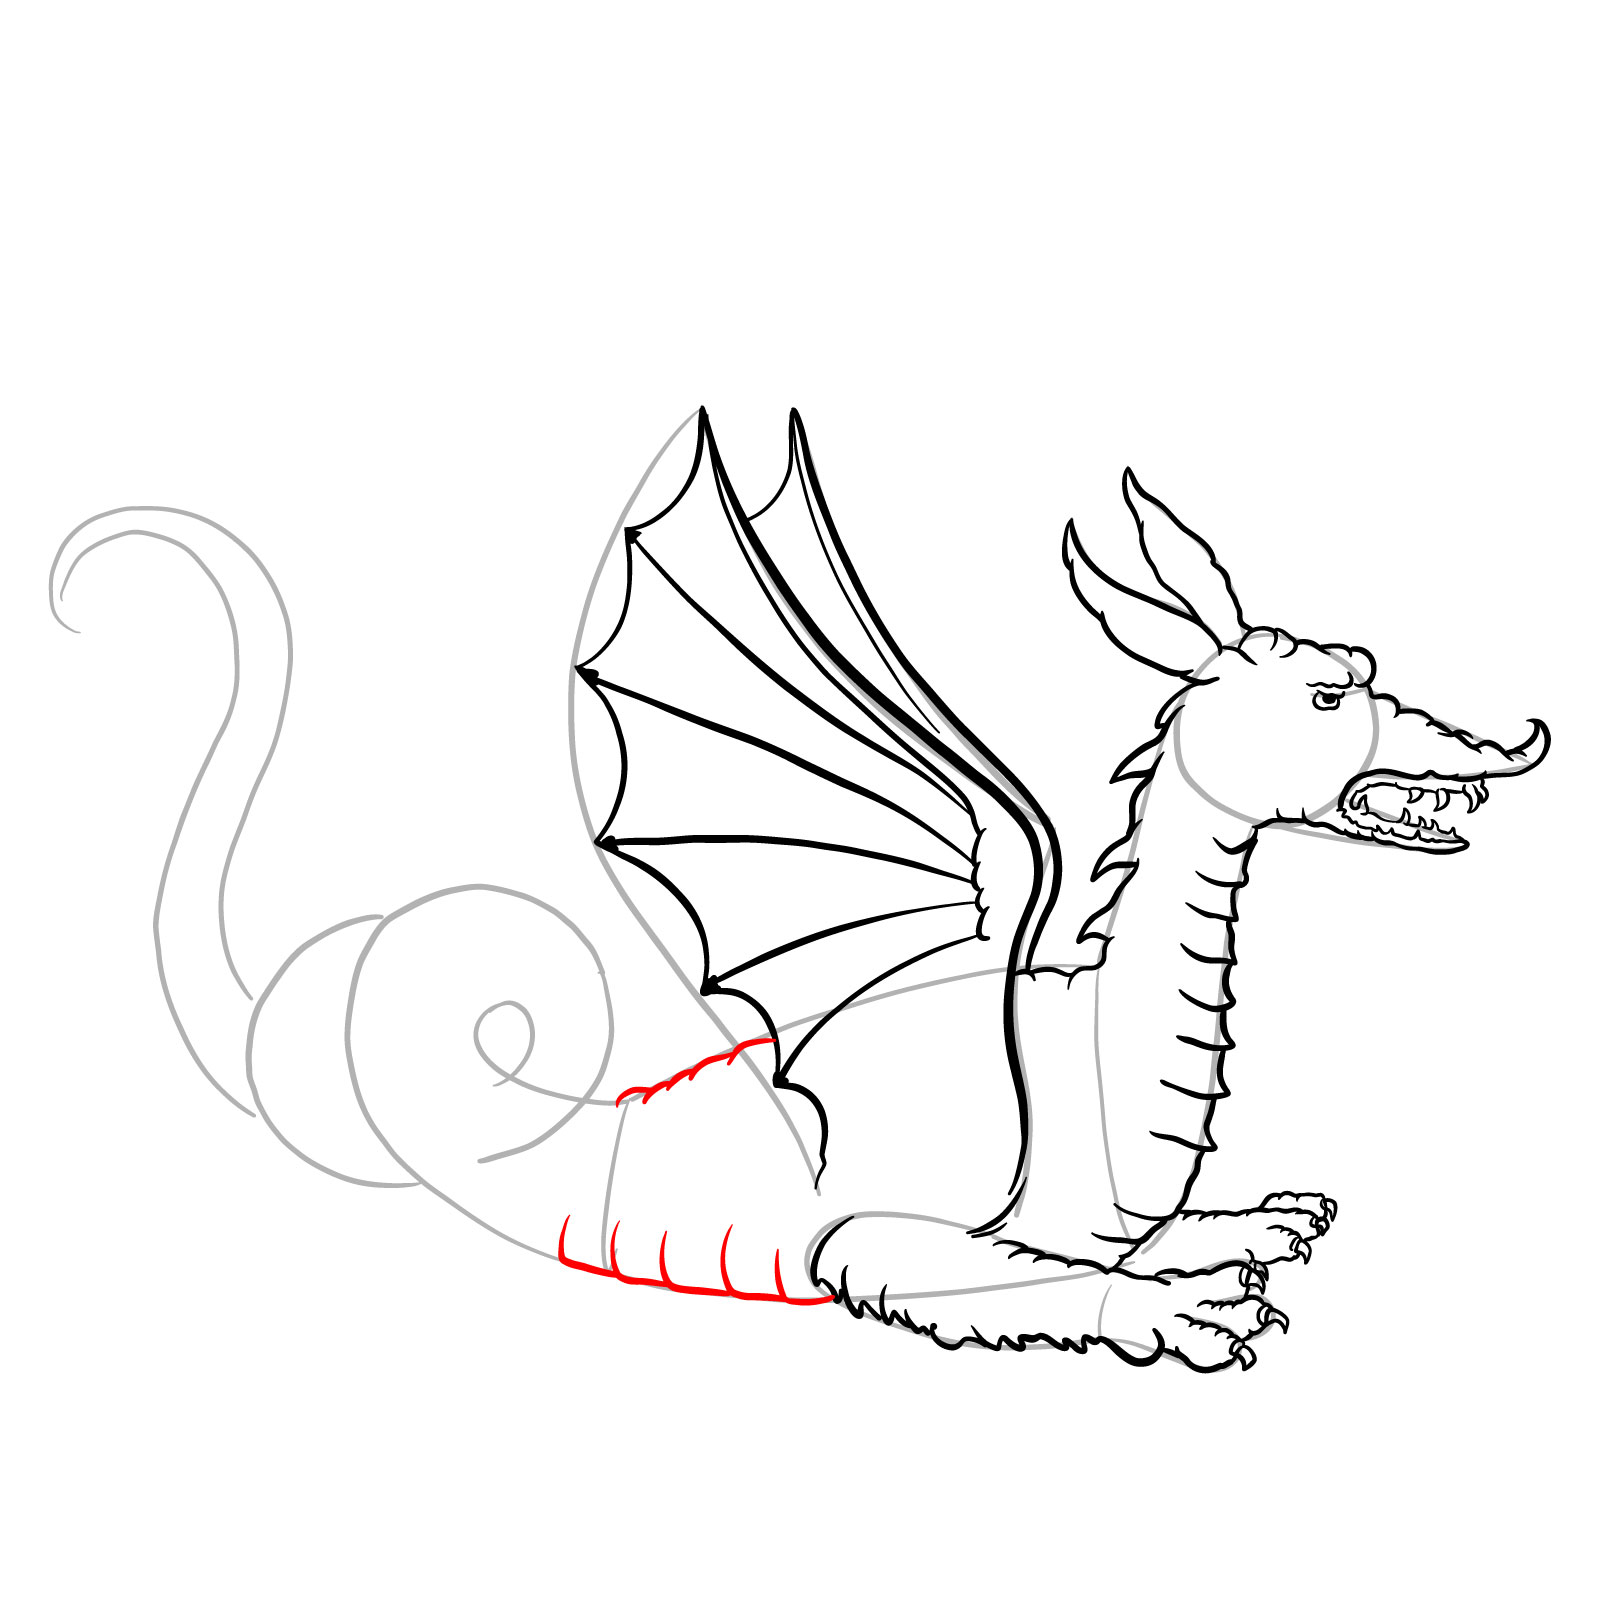 How to draw a Knucker dragon - step 25